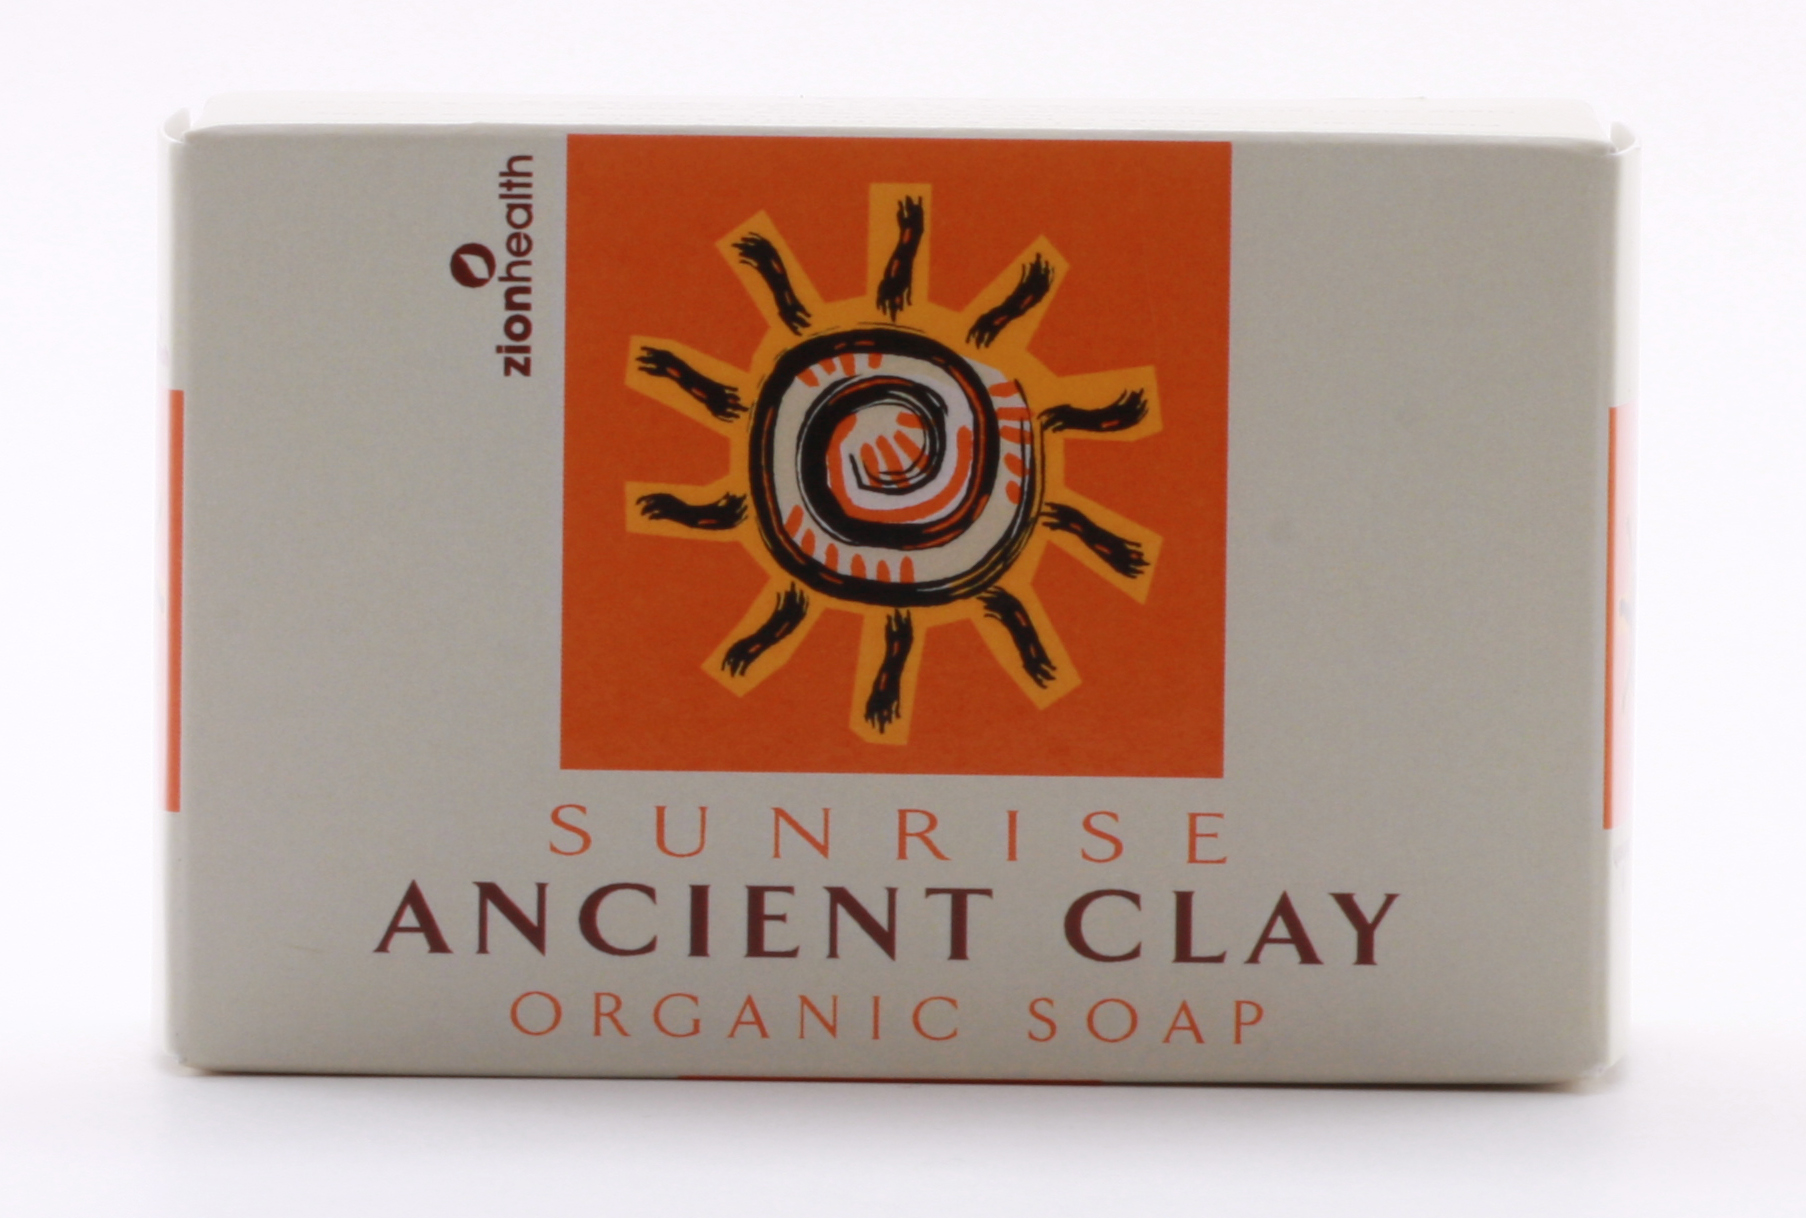 Sunrise Ancient Clay Organic Soap